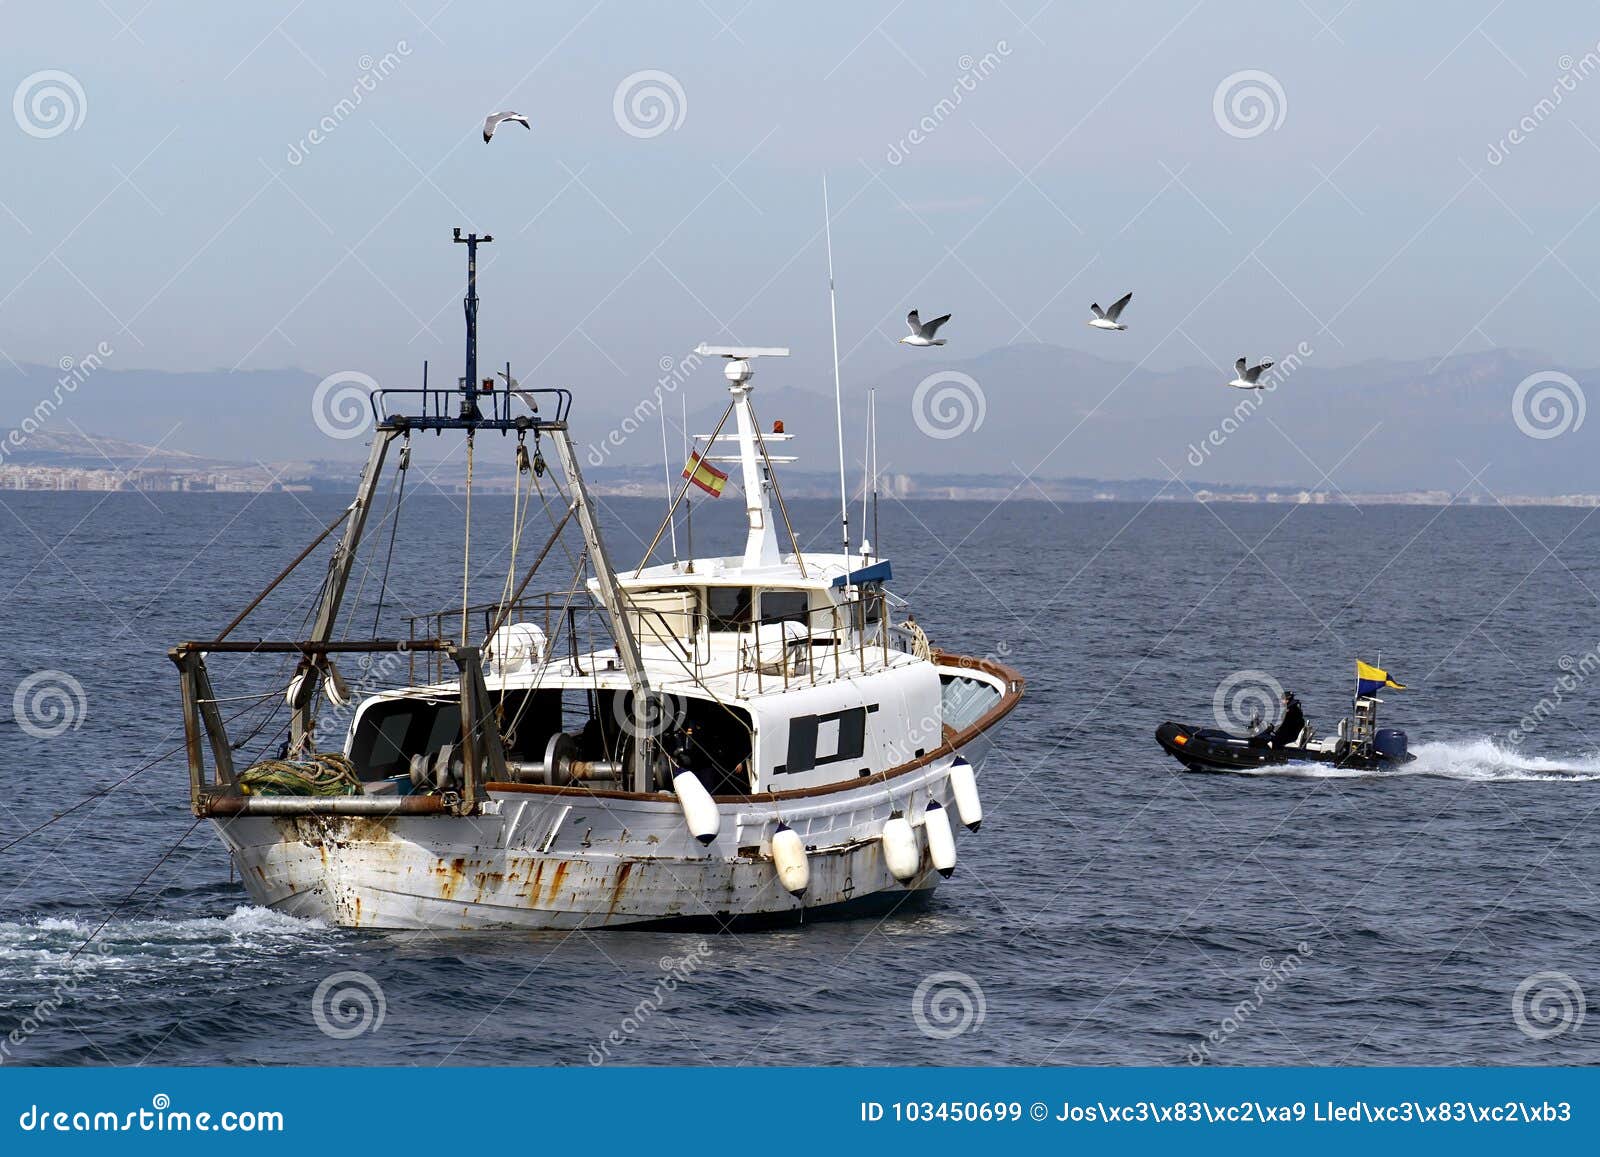 trawler fishing boat ready to use nets.